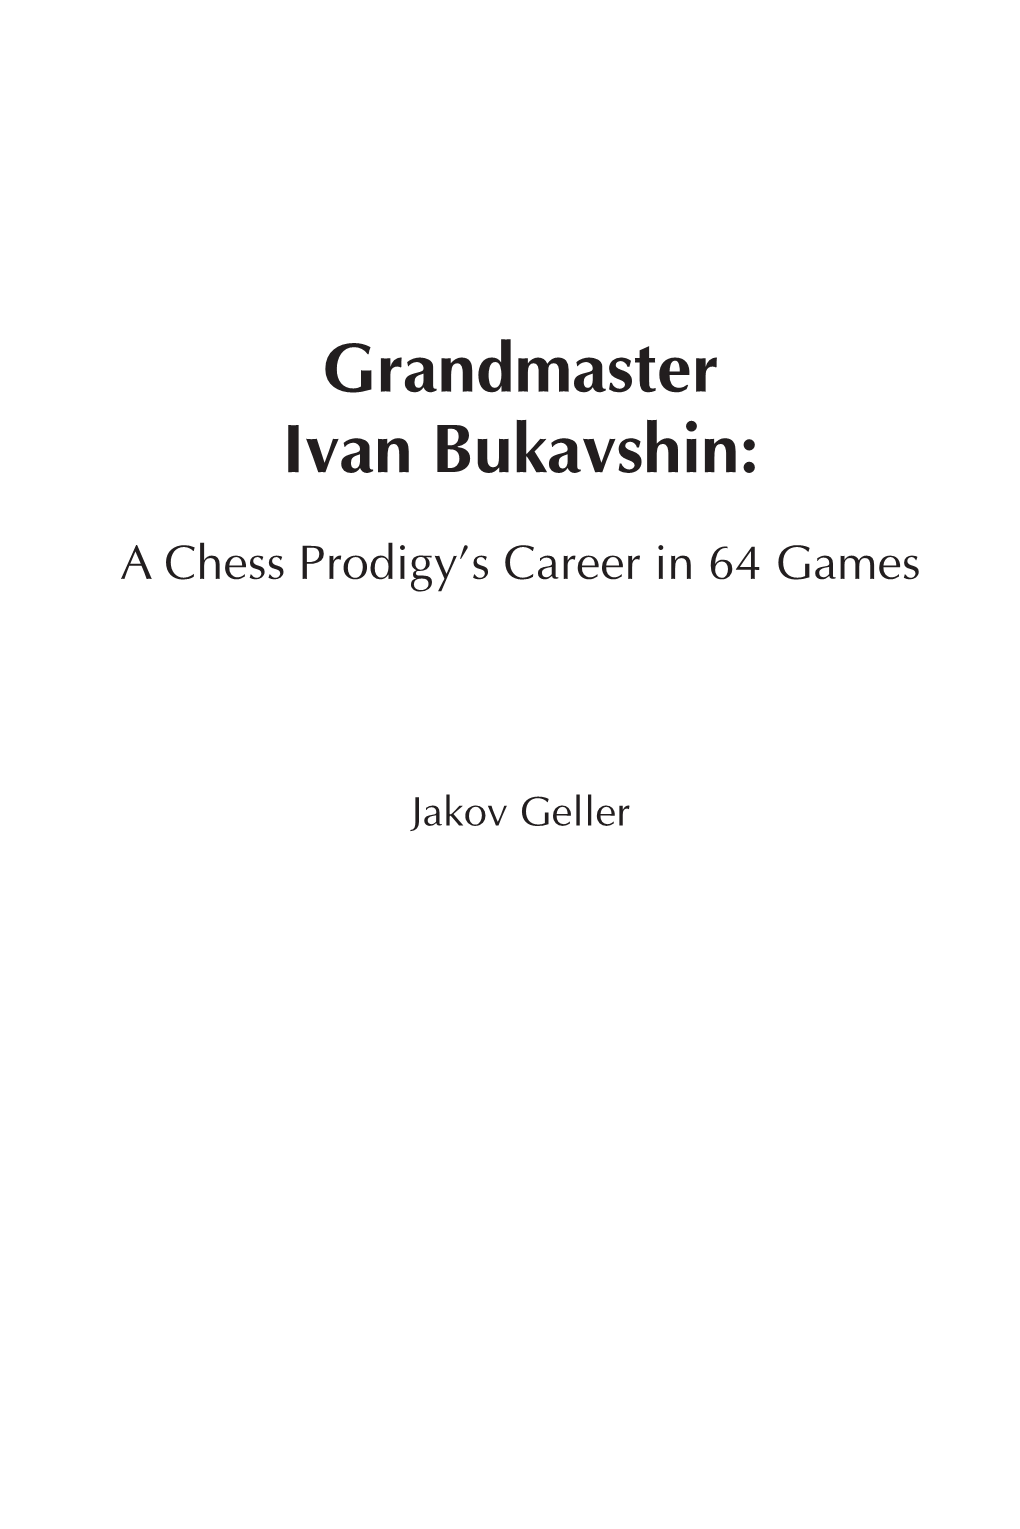 Grandmaster Ivan Bukavshin